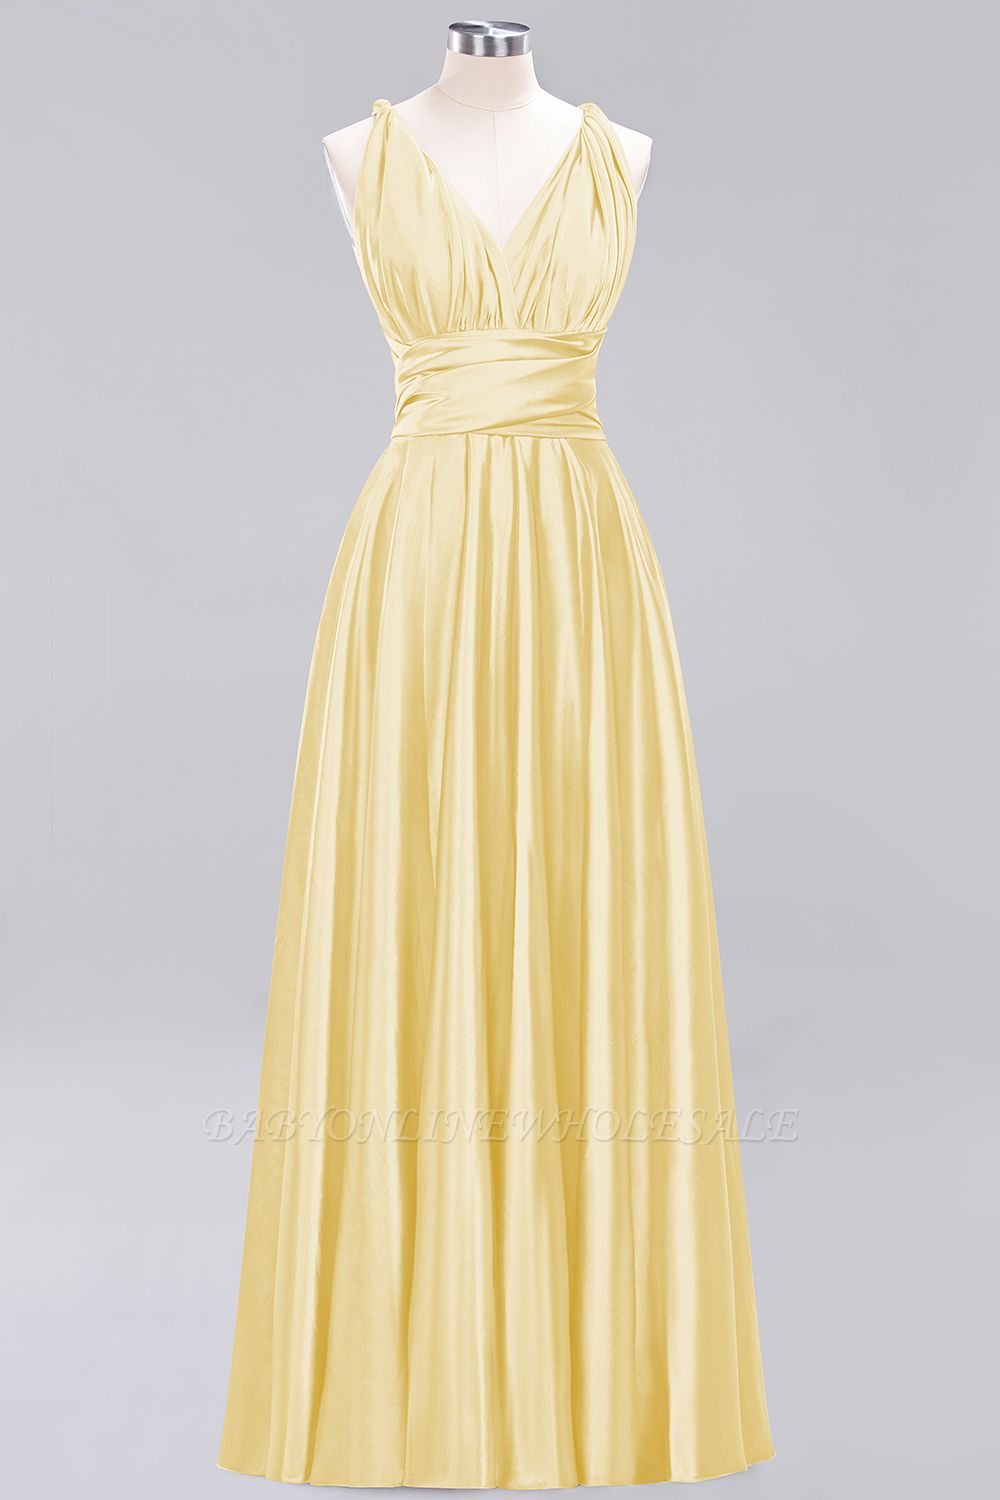 Simple A-Line V-Neck Sleeveless Floor Length Convertible Bridesmaid Dress with Ruffles